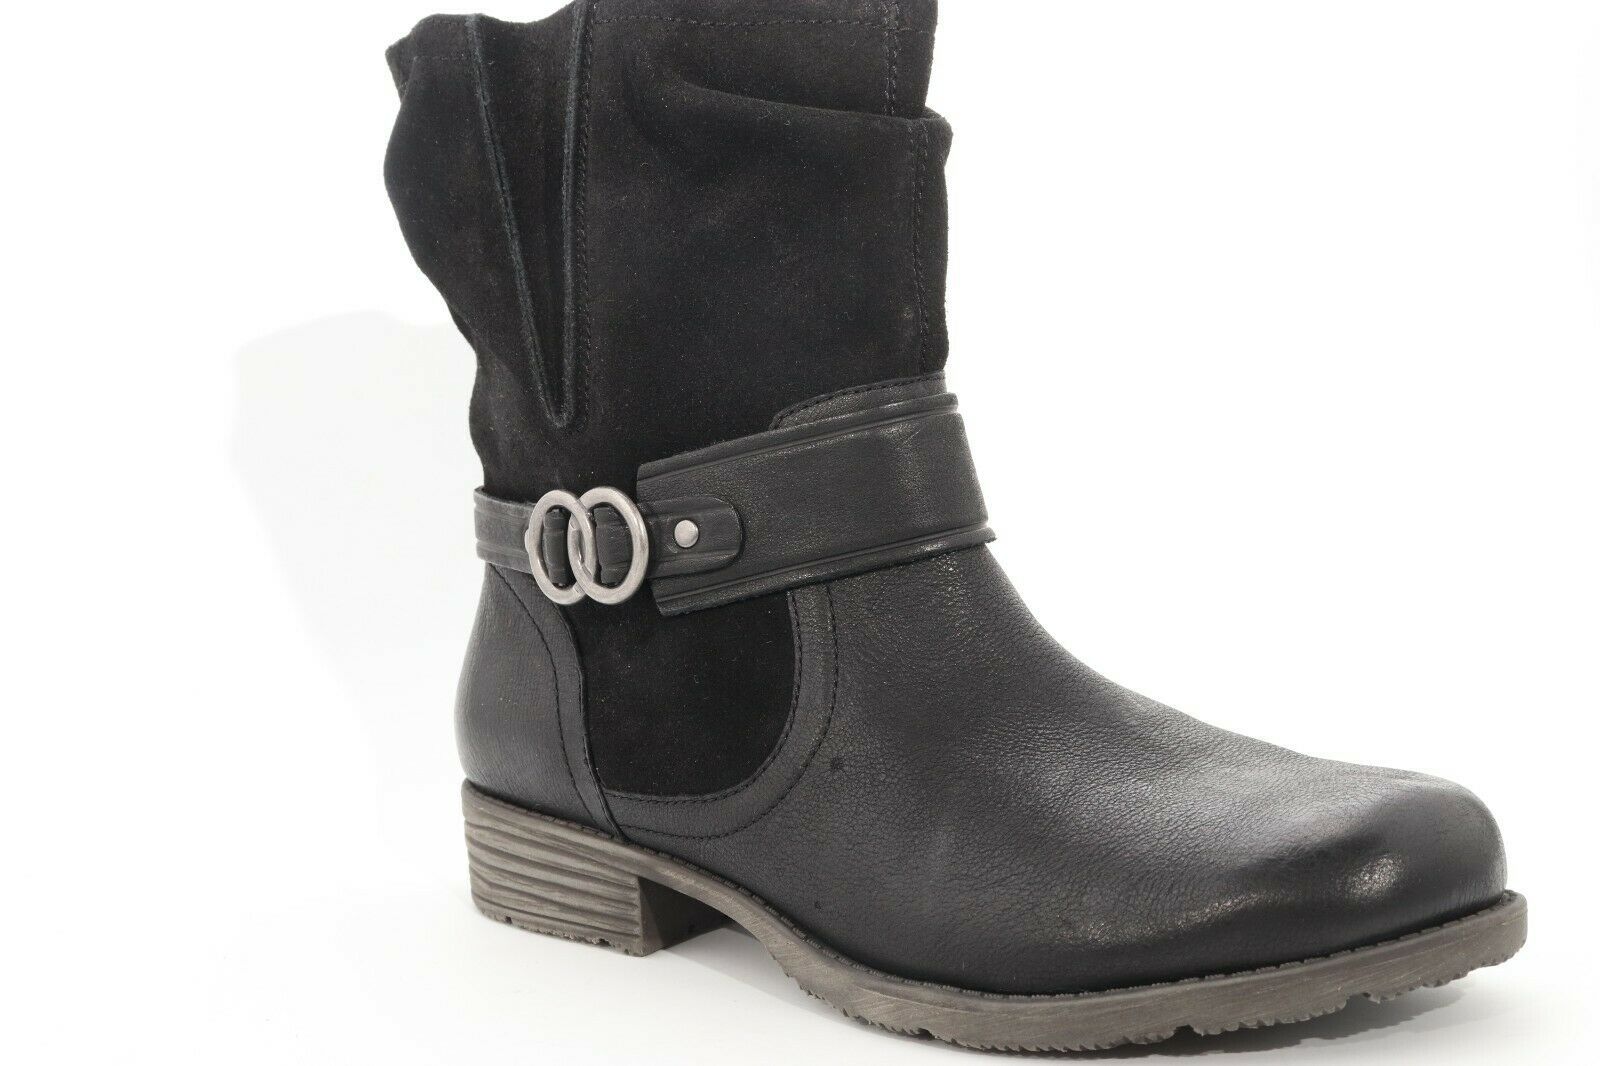 Tara M Hera Boots Black Women's Size US 8 =5545 - Boots